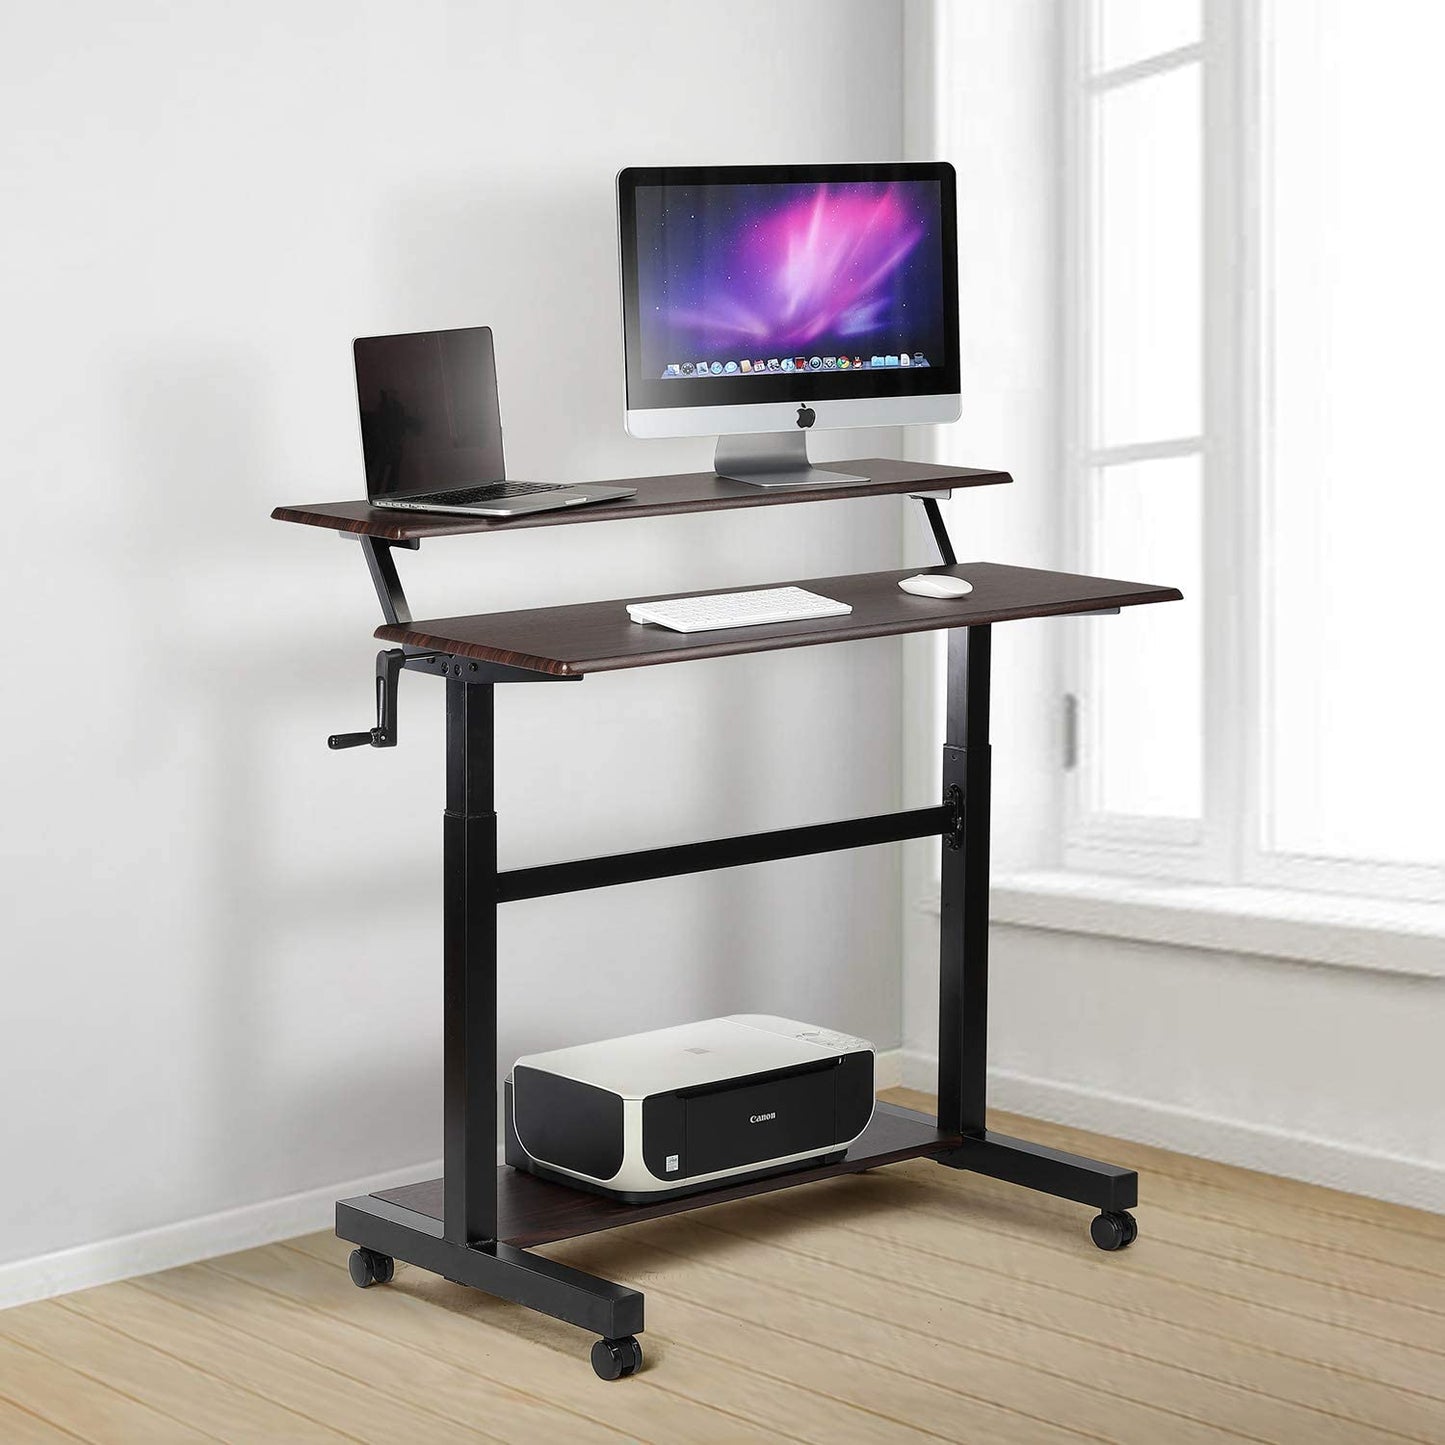 UNICOO – Crank Adjustable Height Standing Desk, 2 Tier Adjustable Sit to Stand up Desk, Mobile Standing Desk, Rolling Desk 2T-Crank